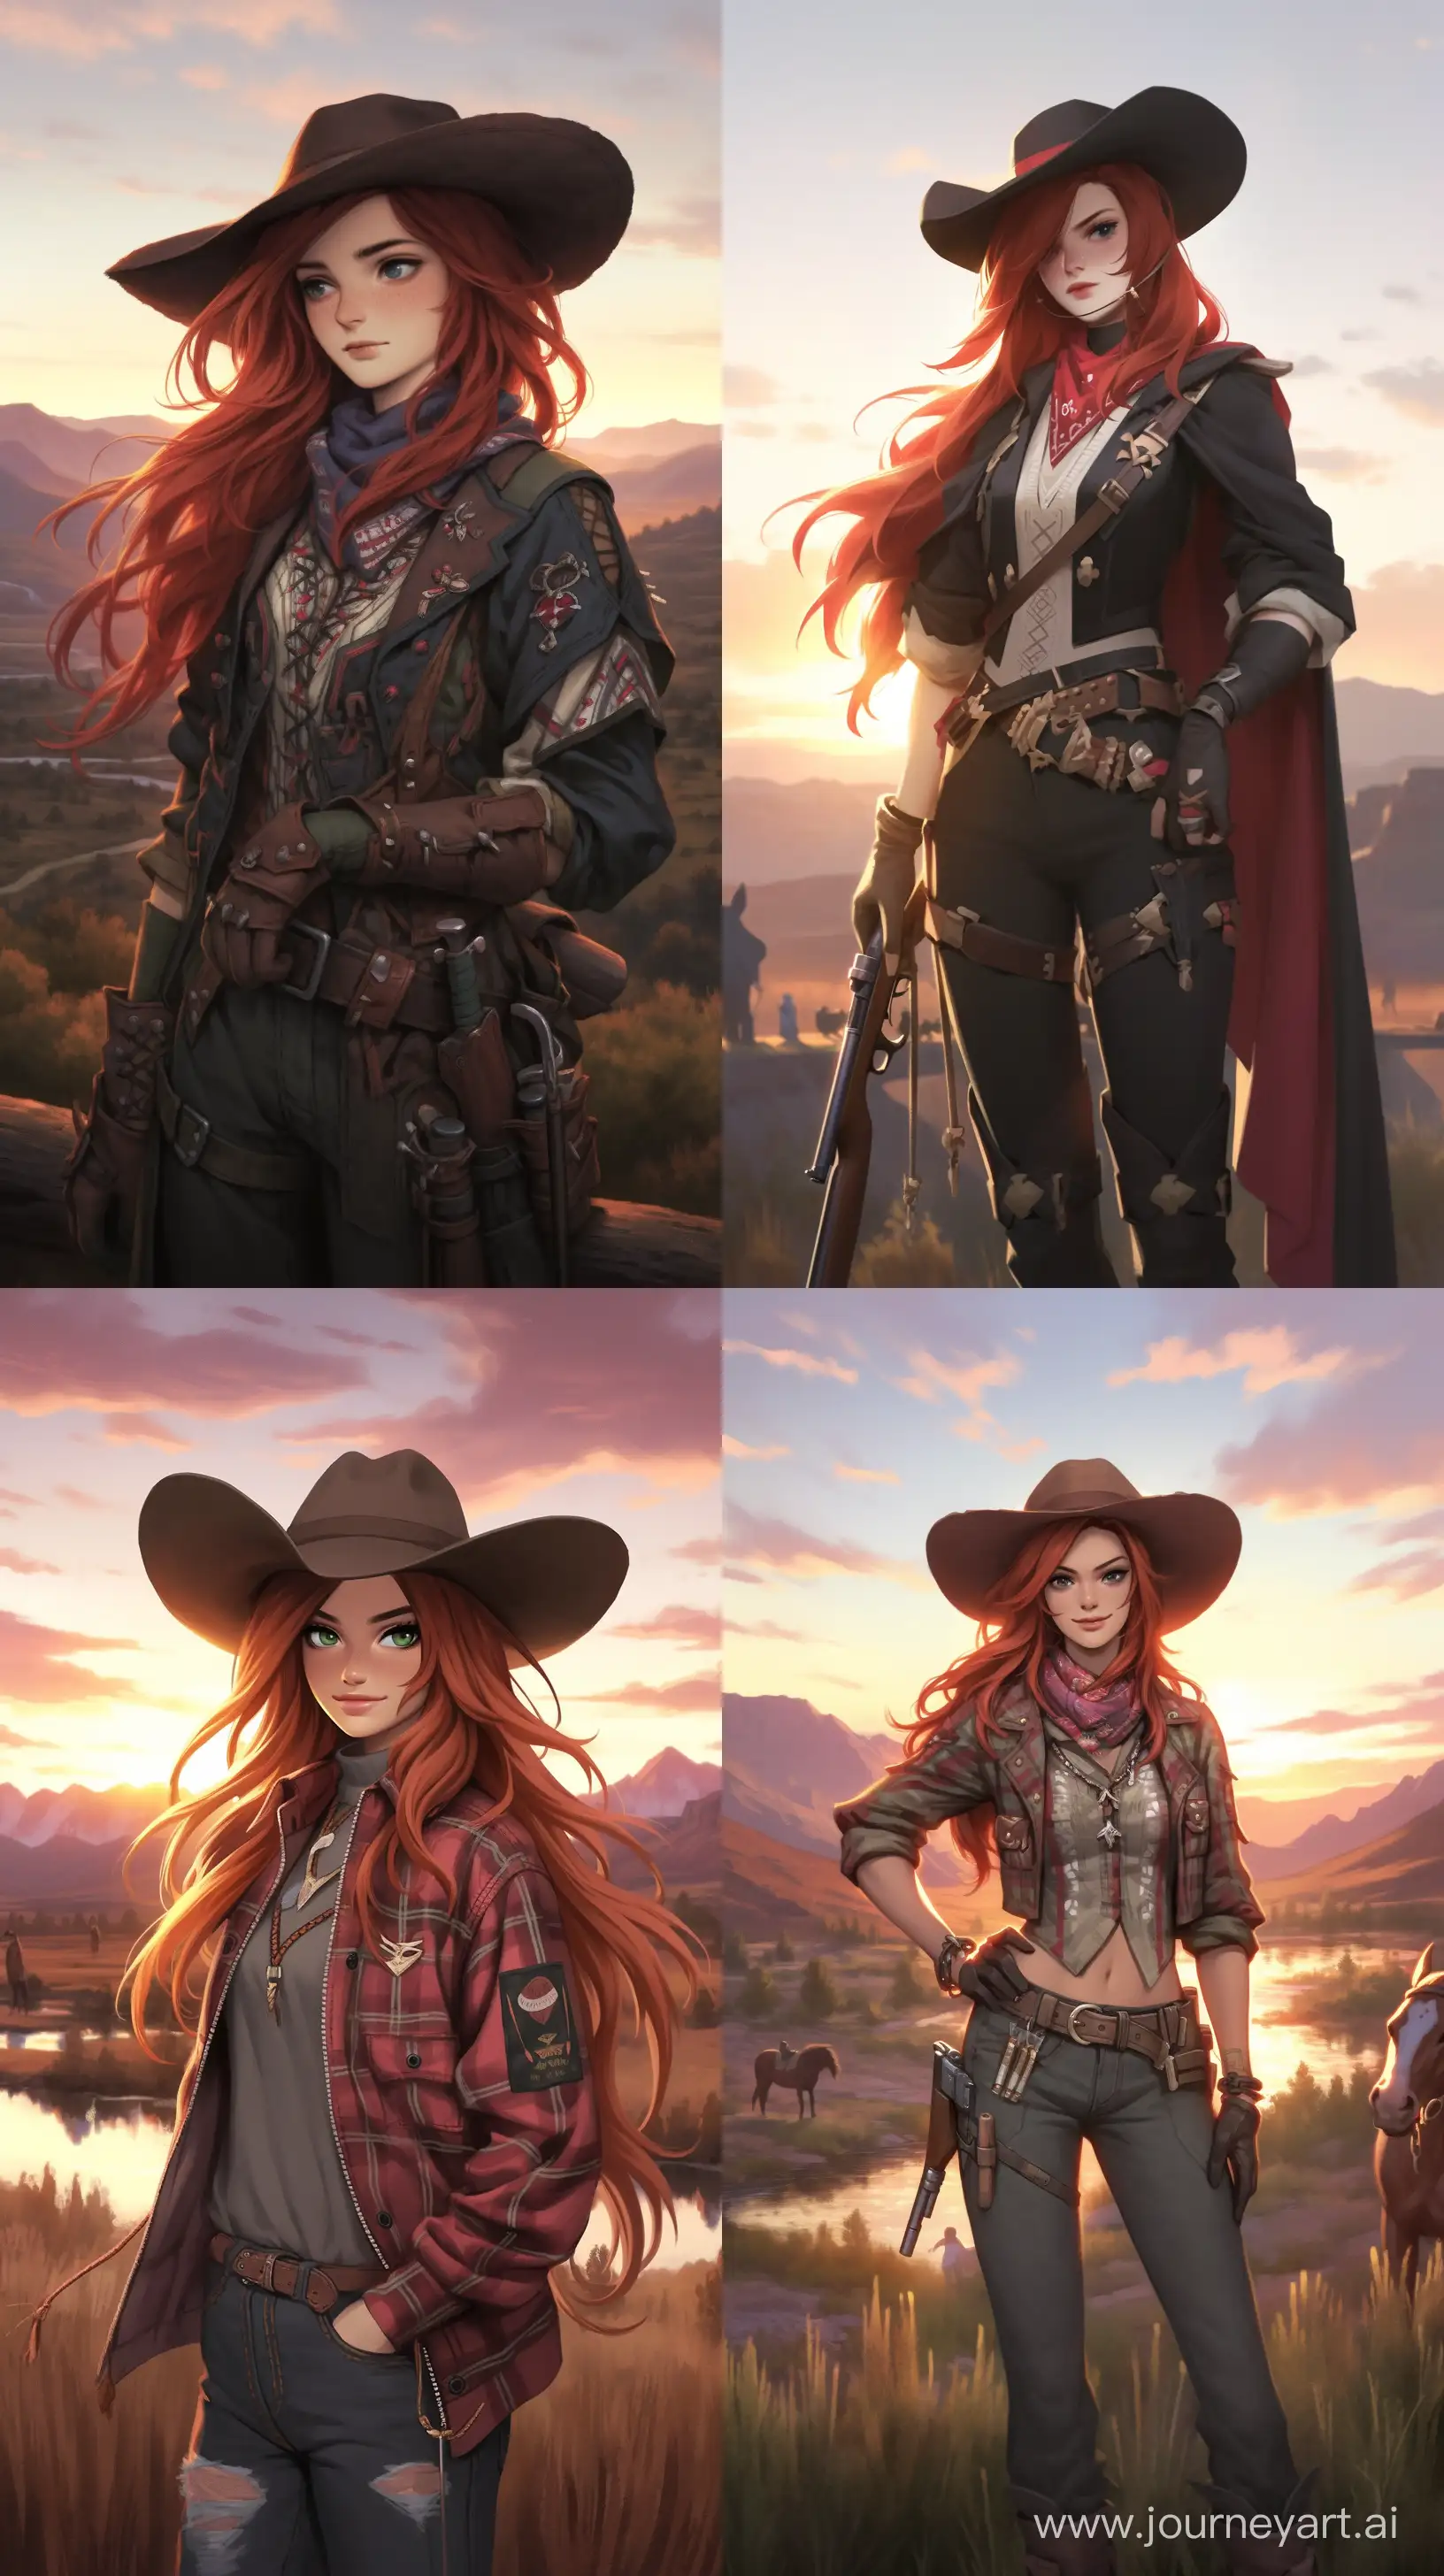 Spirited-Redhead-Gunslinger-Amidst-Sunset-Silhouettes